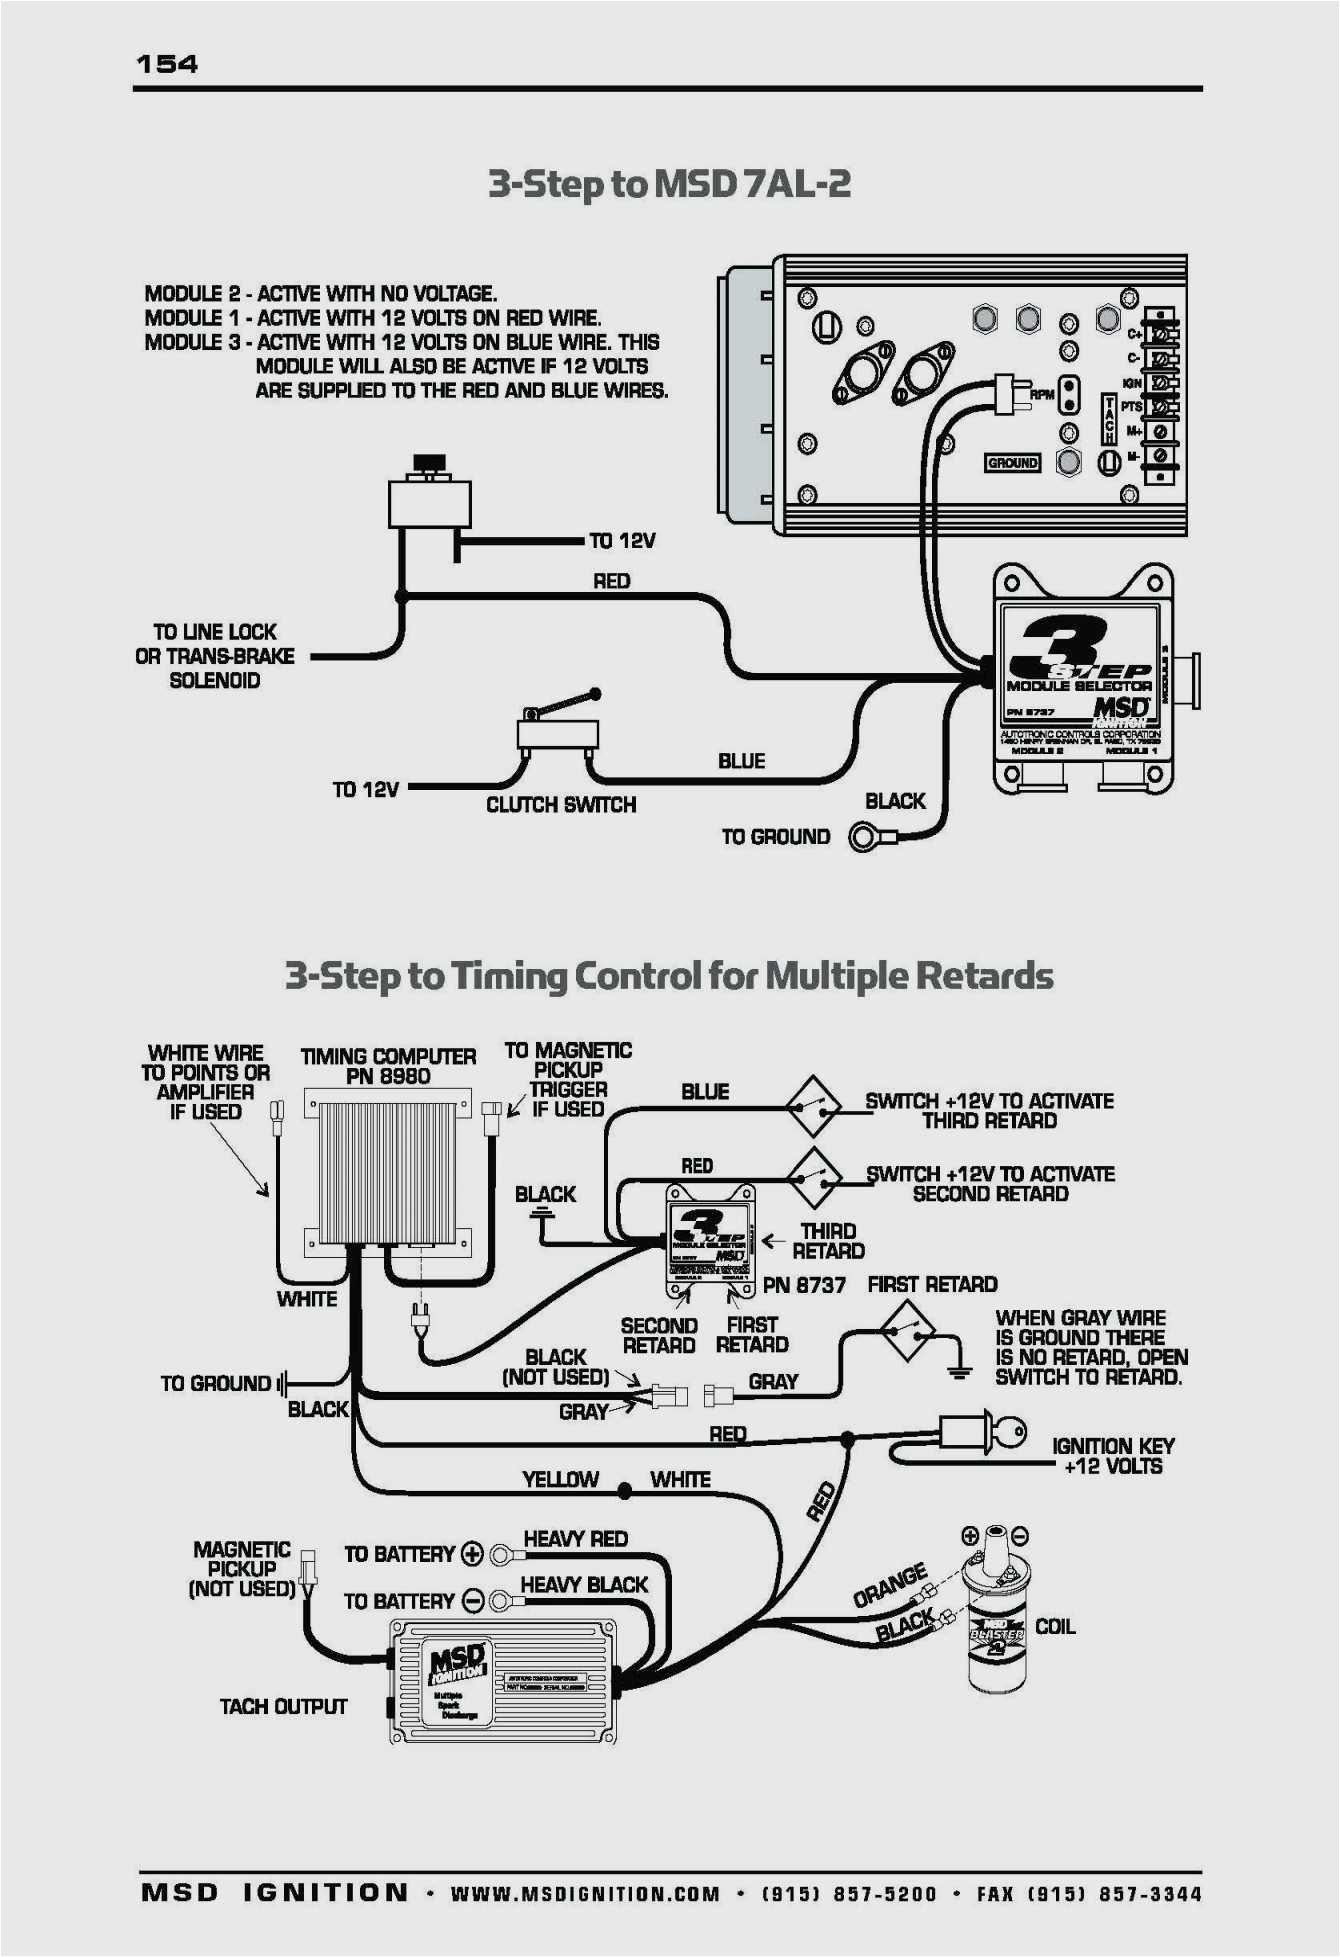 msd6aln wiring diagram msd 6425 wiring harness detailed schematics diagram of msd6aln wiring diagram jpg